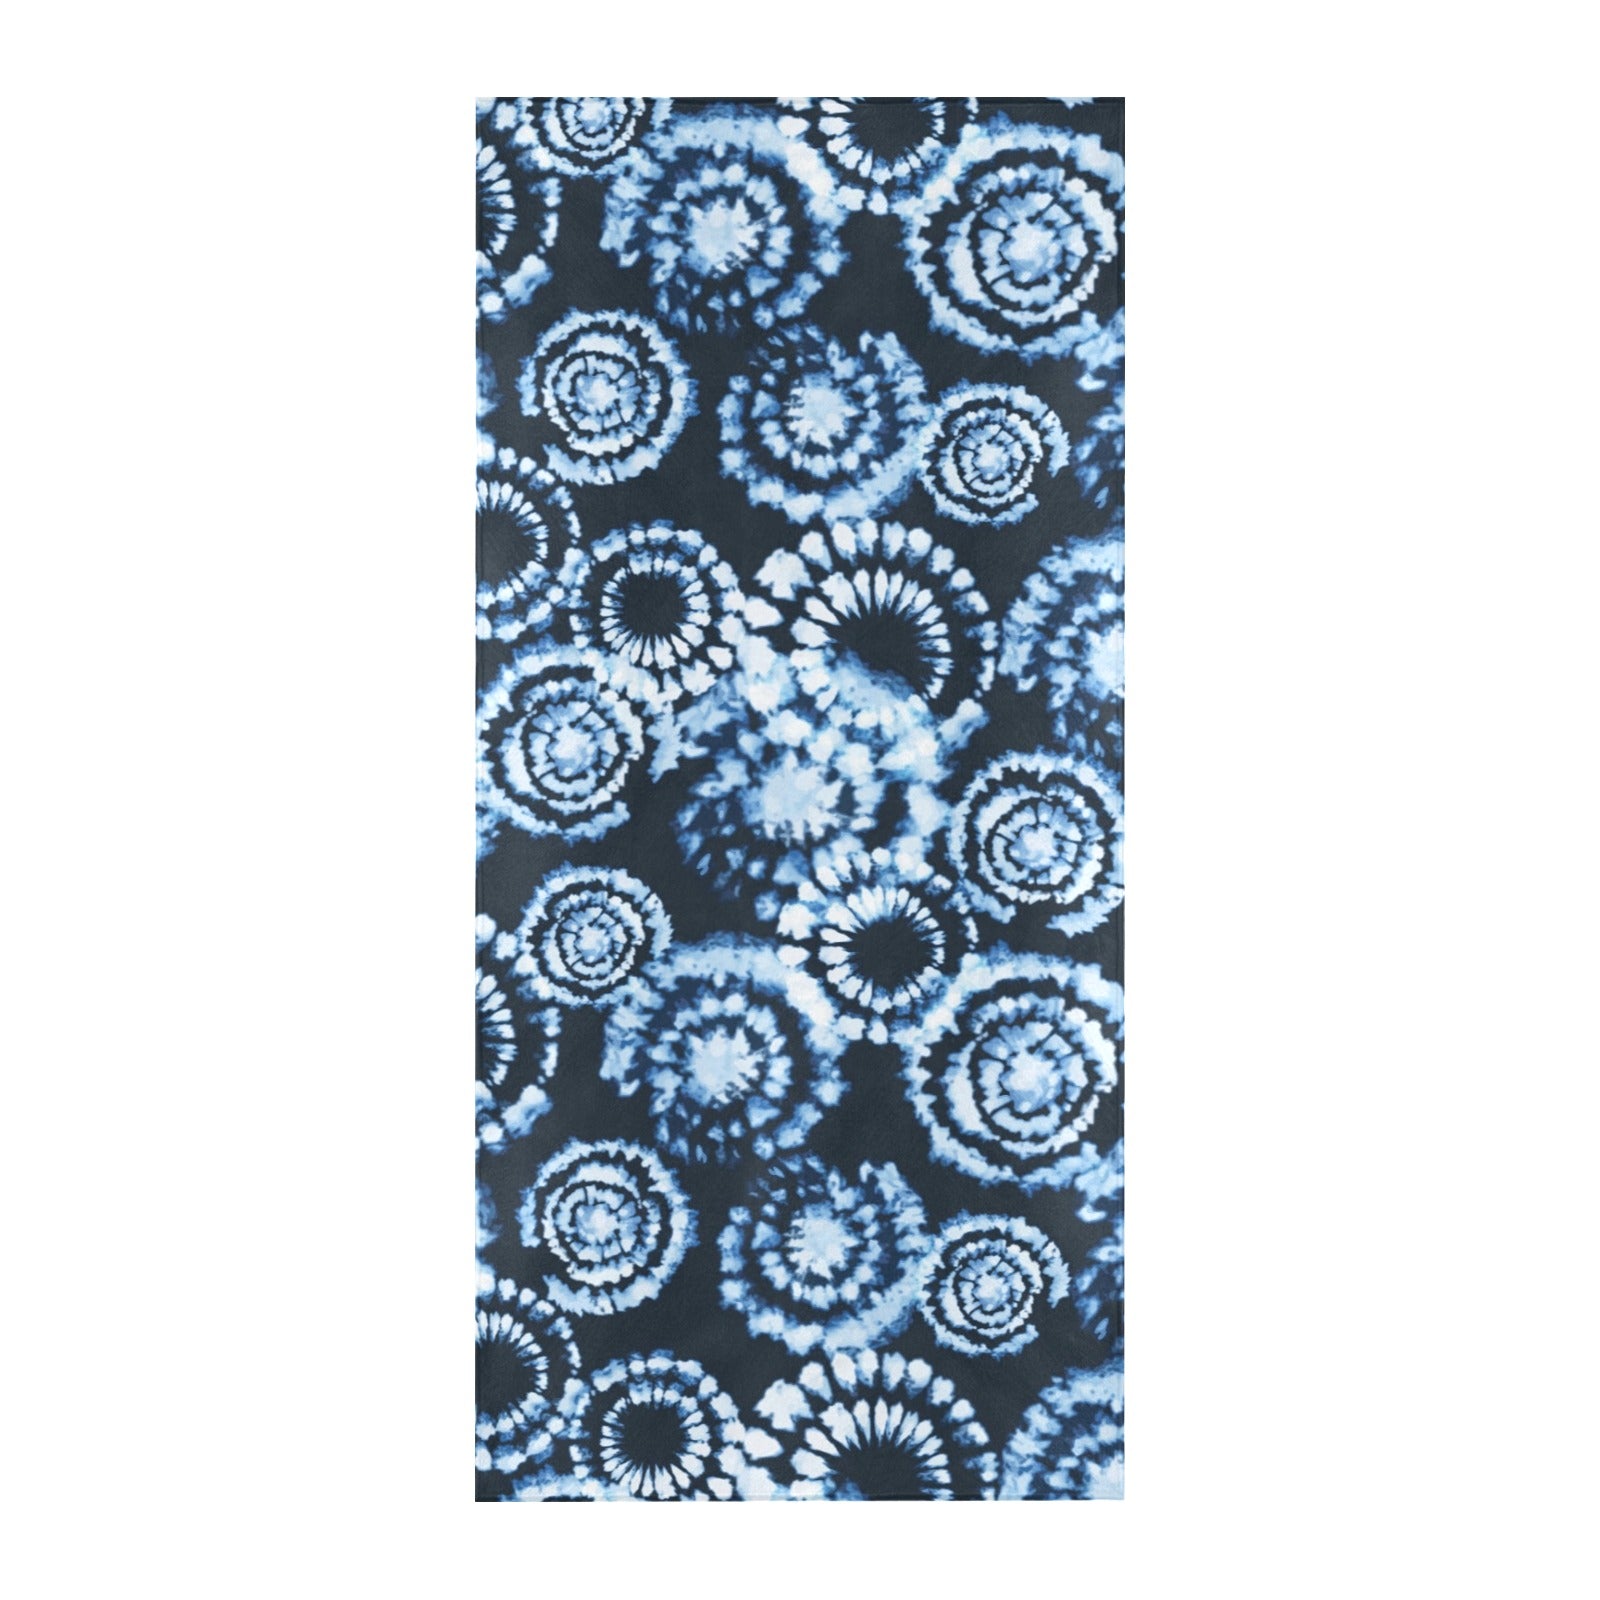 Tie Dye Dark Blue Print Design LKS306 Beach Towel 32" x 71"